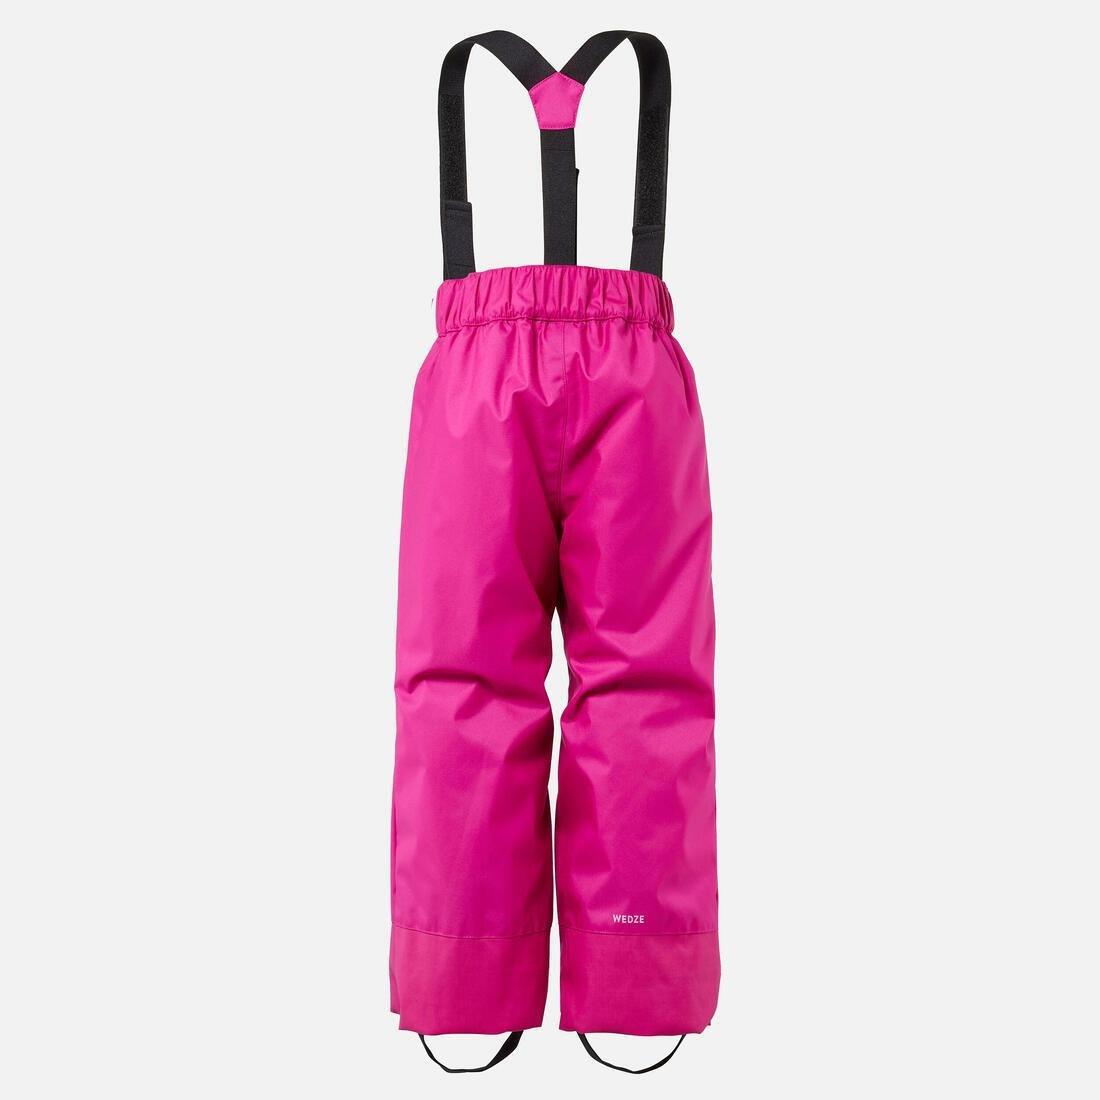 WEDZE - Kids Warm And Waterproof Ski Trousers - 100, Grey